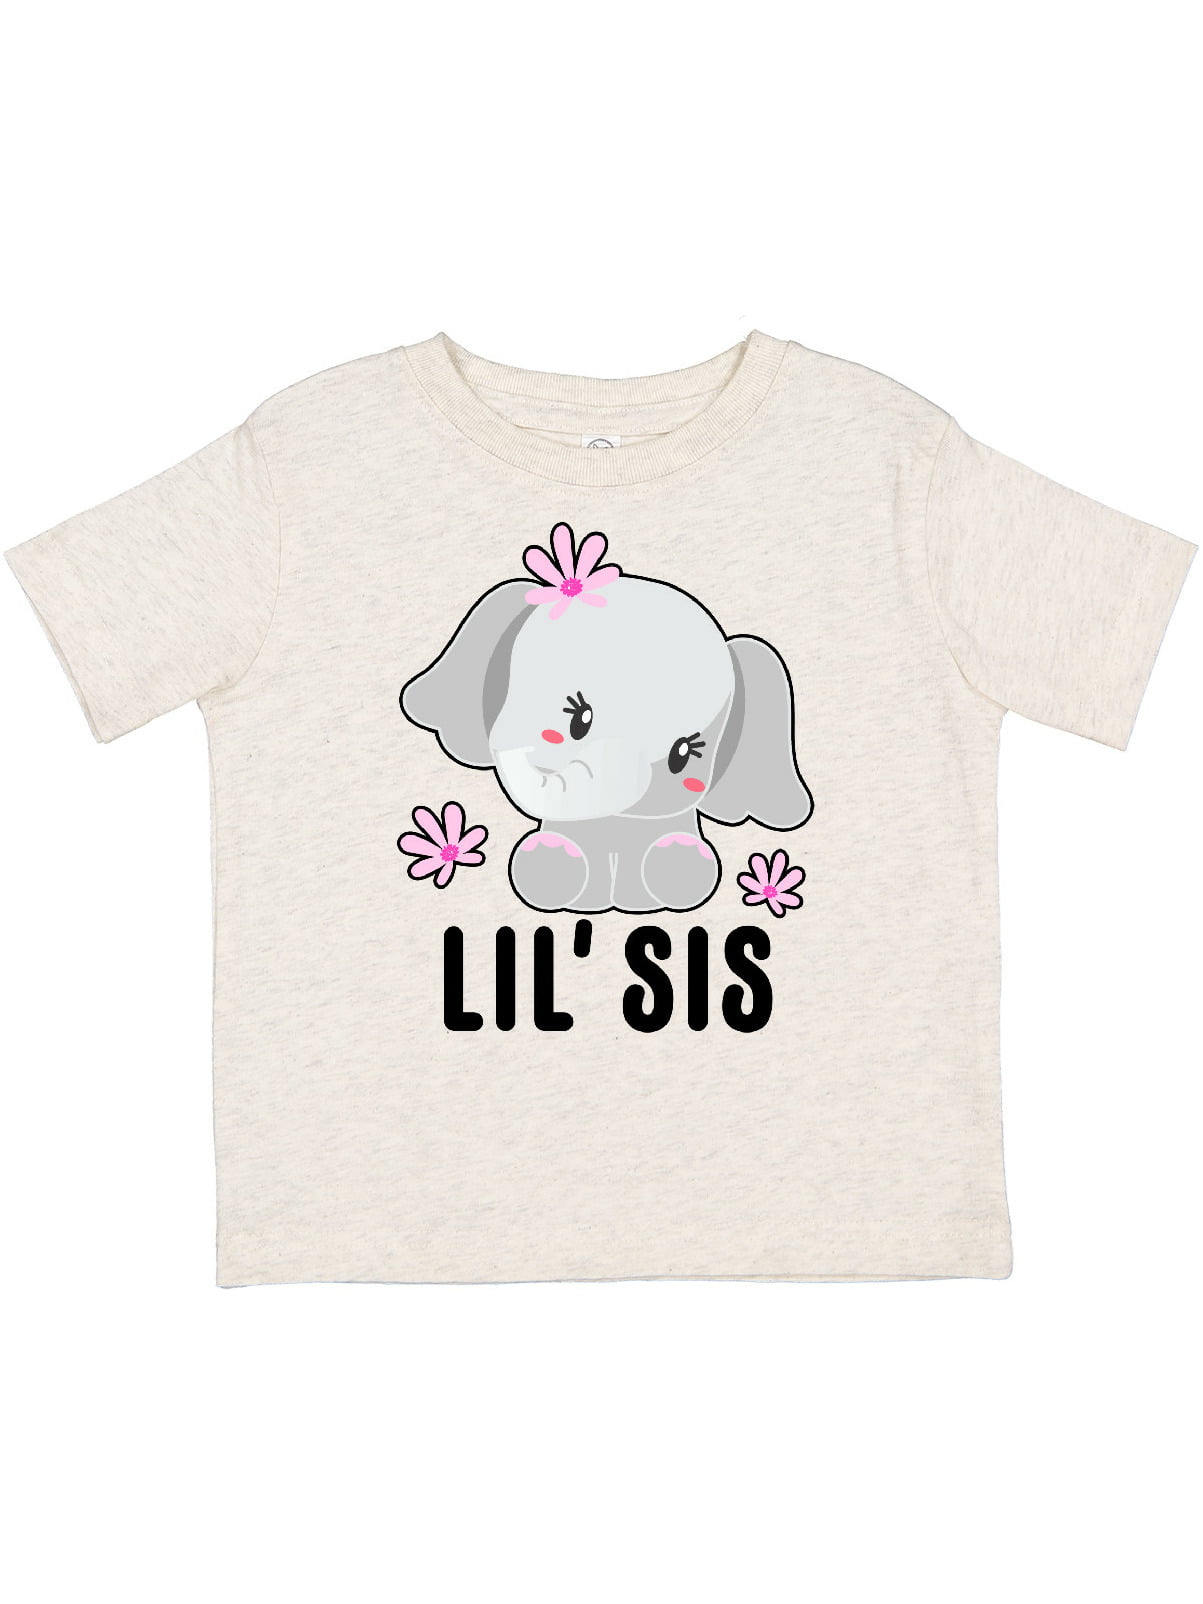 Inktastic Big Sis Elephant Toddler T-Shirt Kids Sister Siblings Cute Girls For 